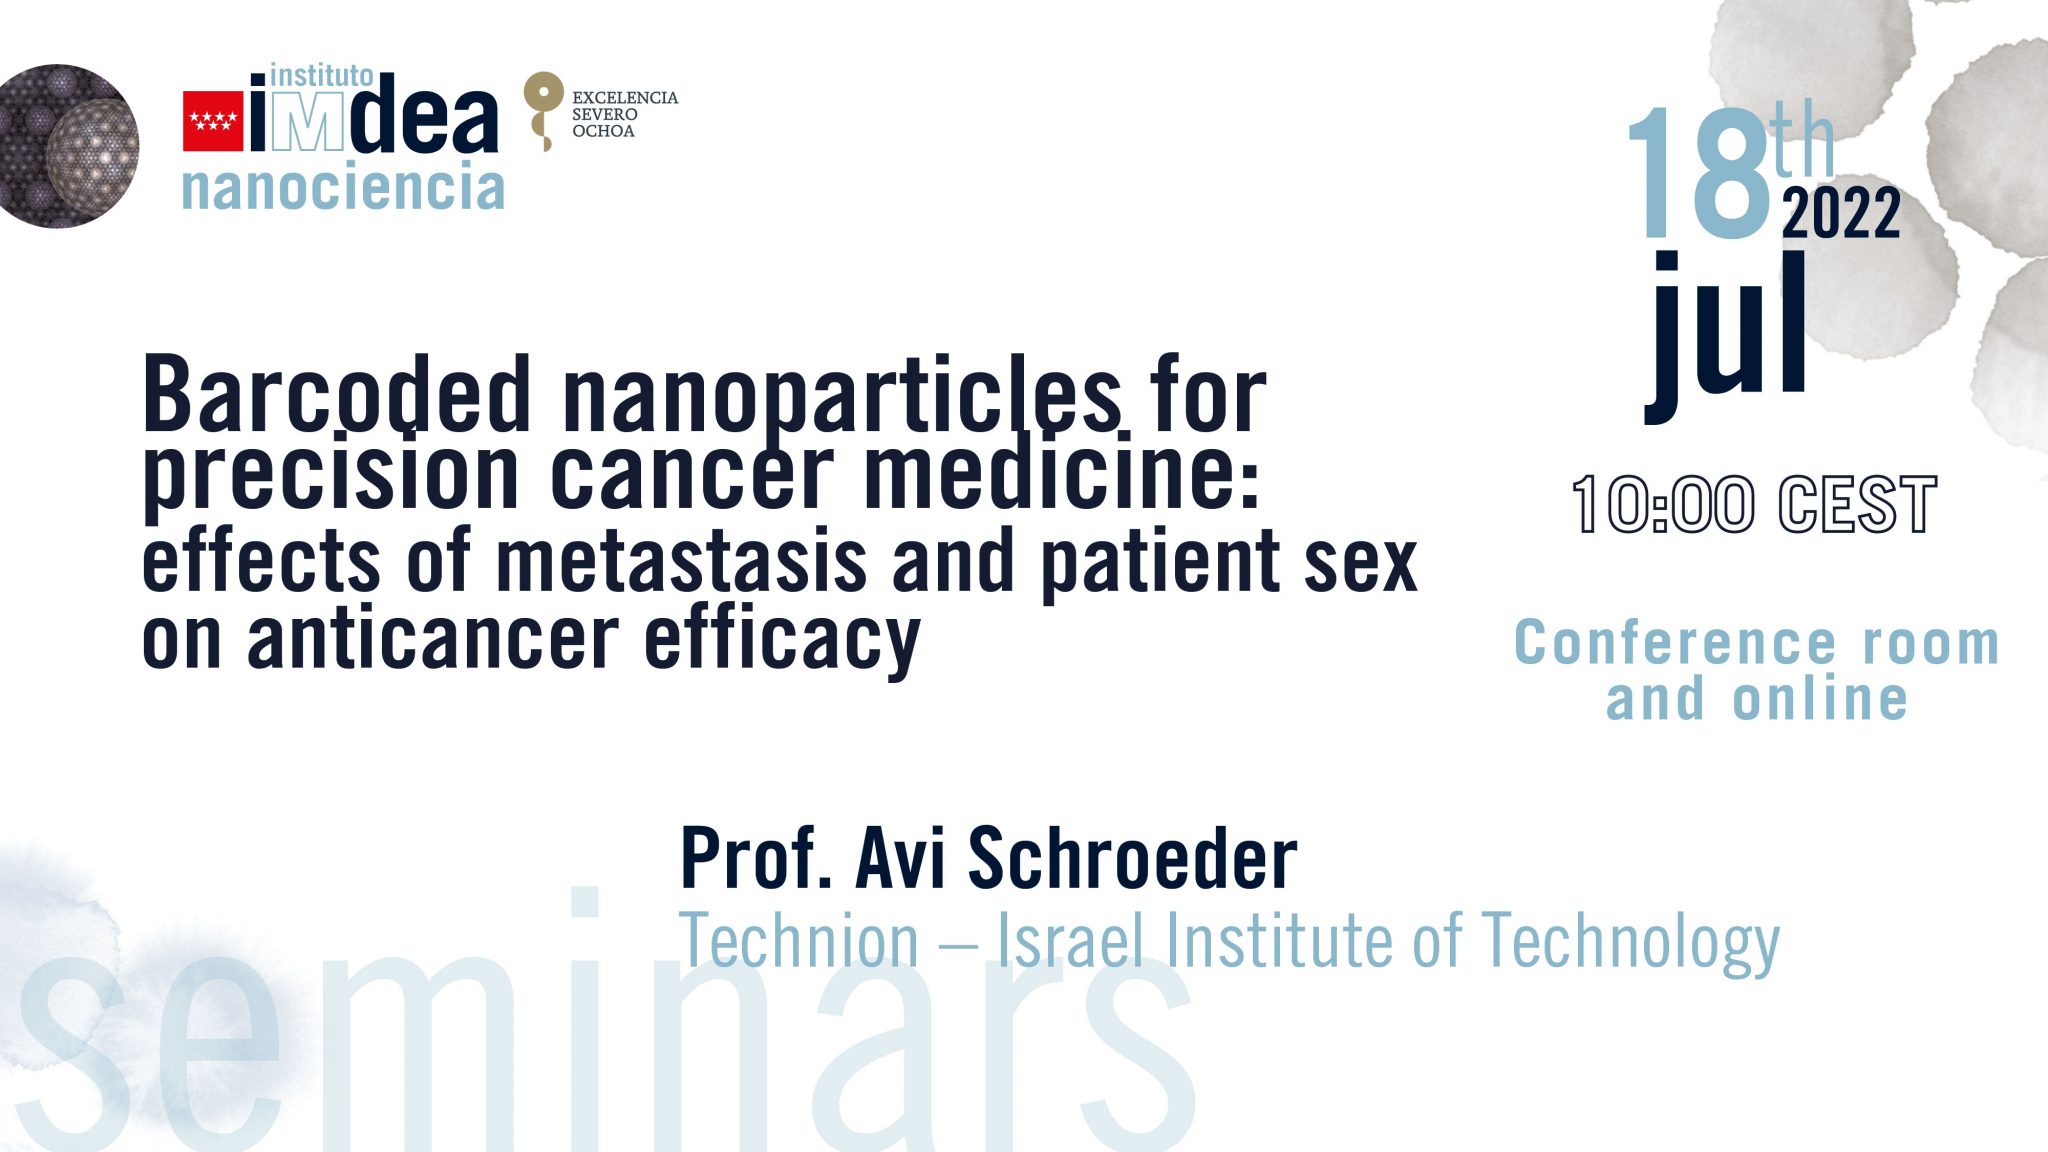 IMDEA Nanociencia webinar “Barcoded nanoparticles for precision cancer medicine” by Prof. Avi Schroeder